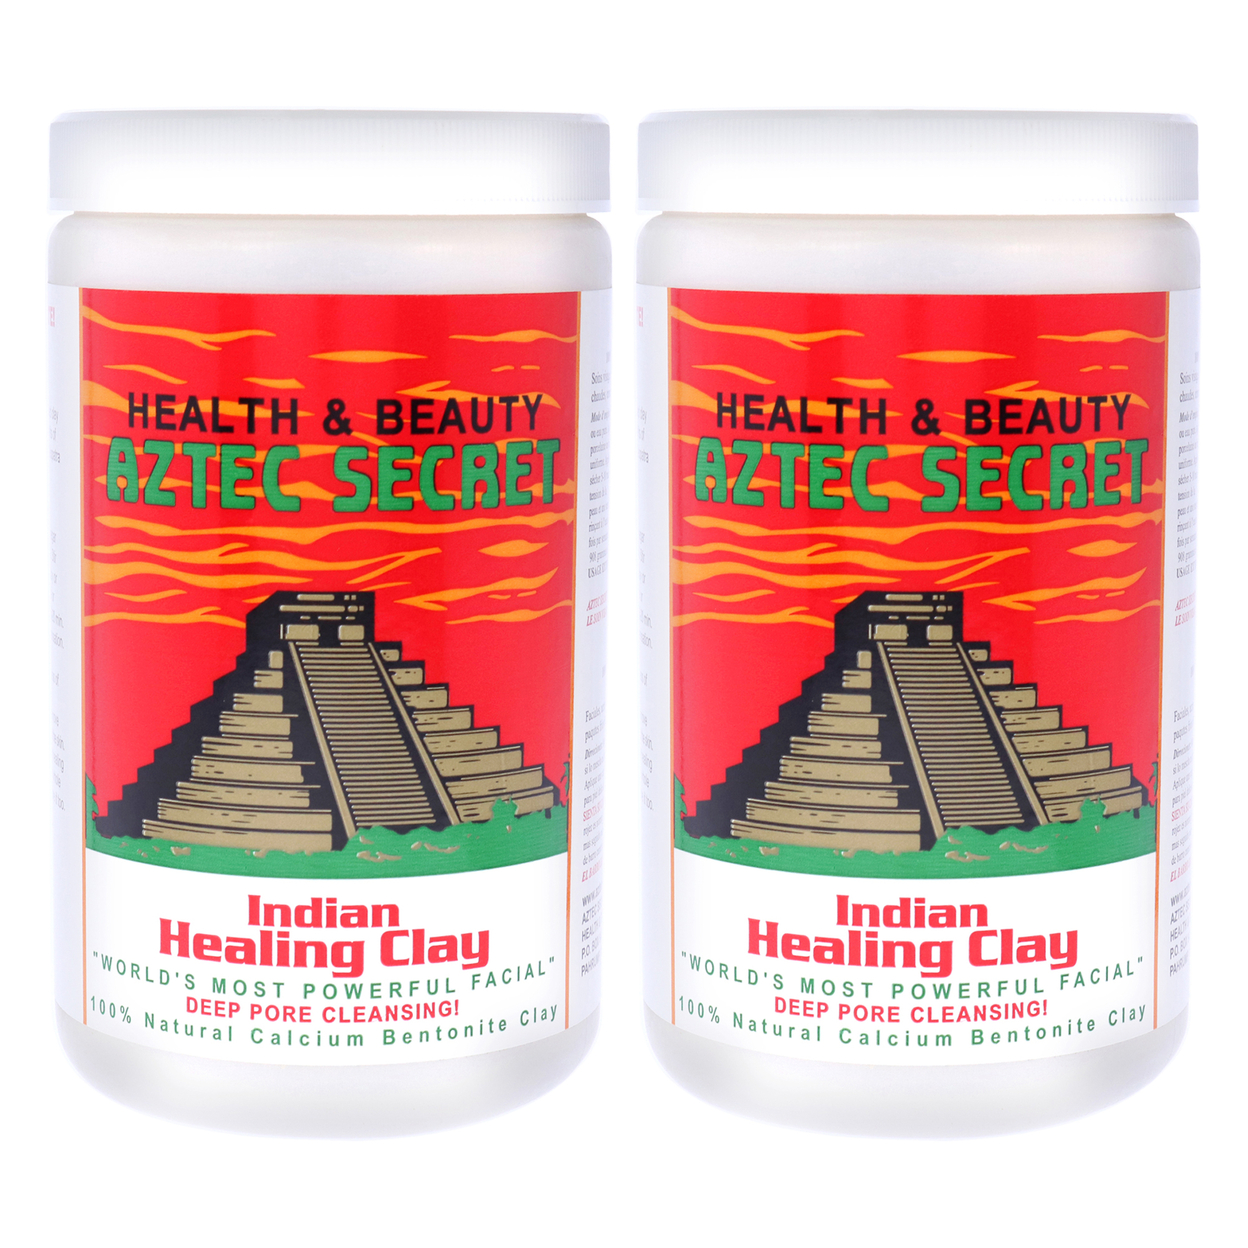 Aztec Secret Indian Healing Clay - Pack of 2 2 lb